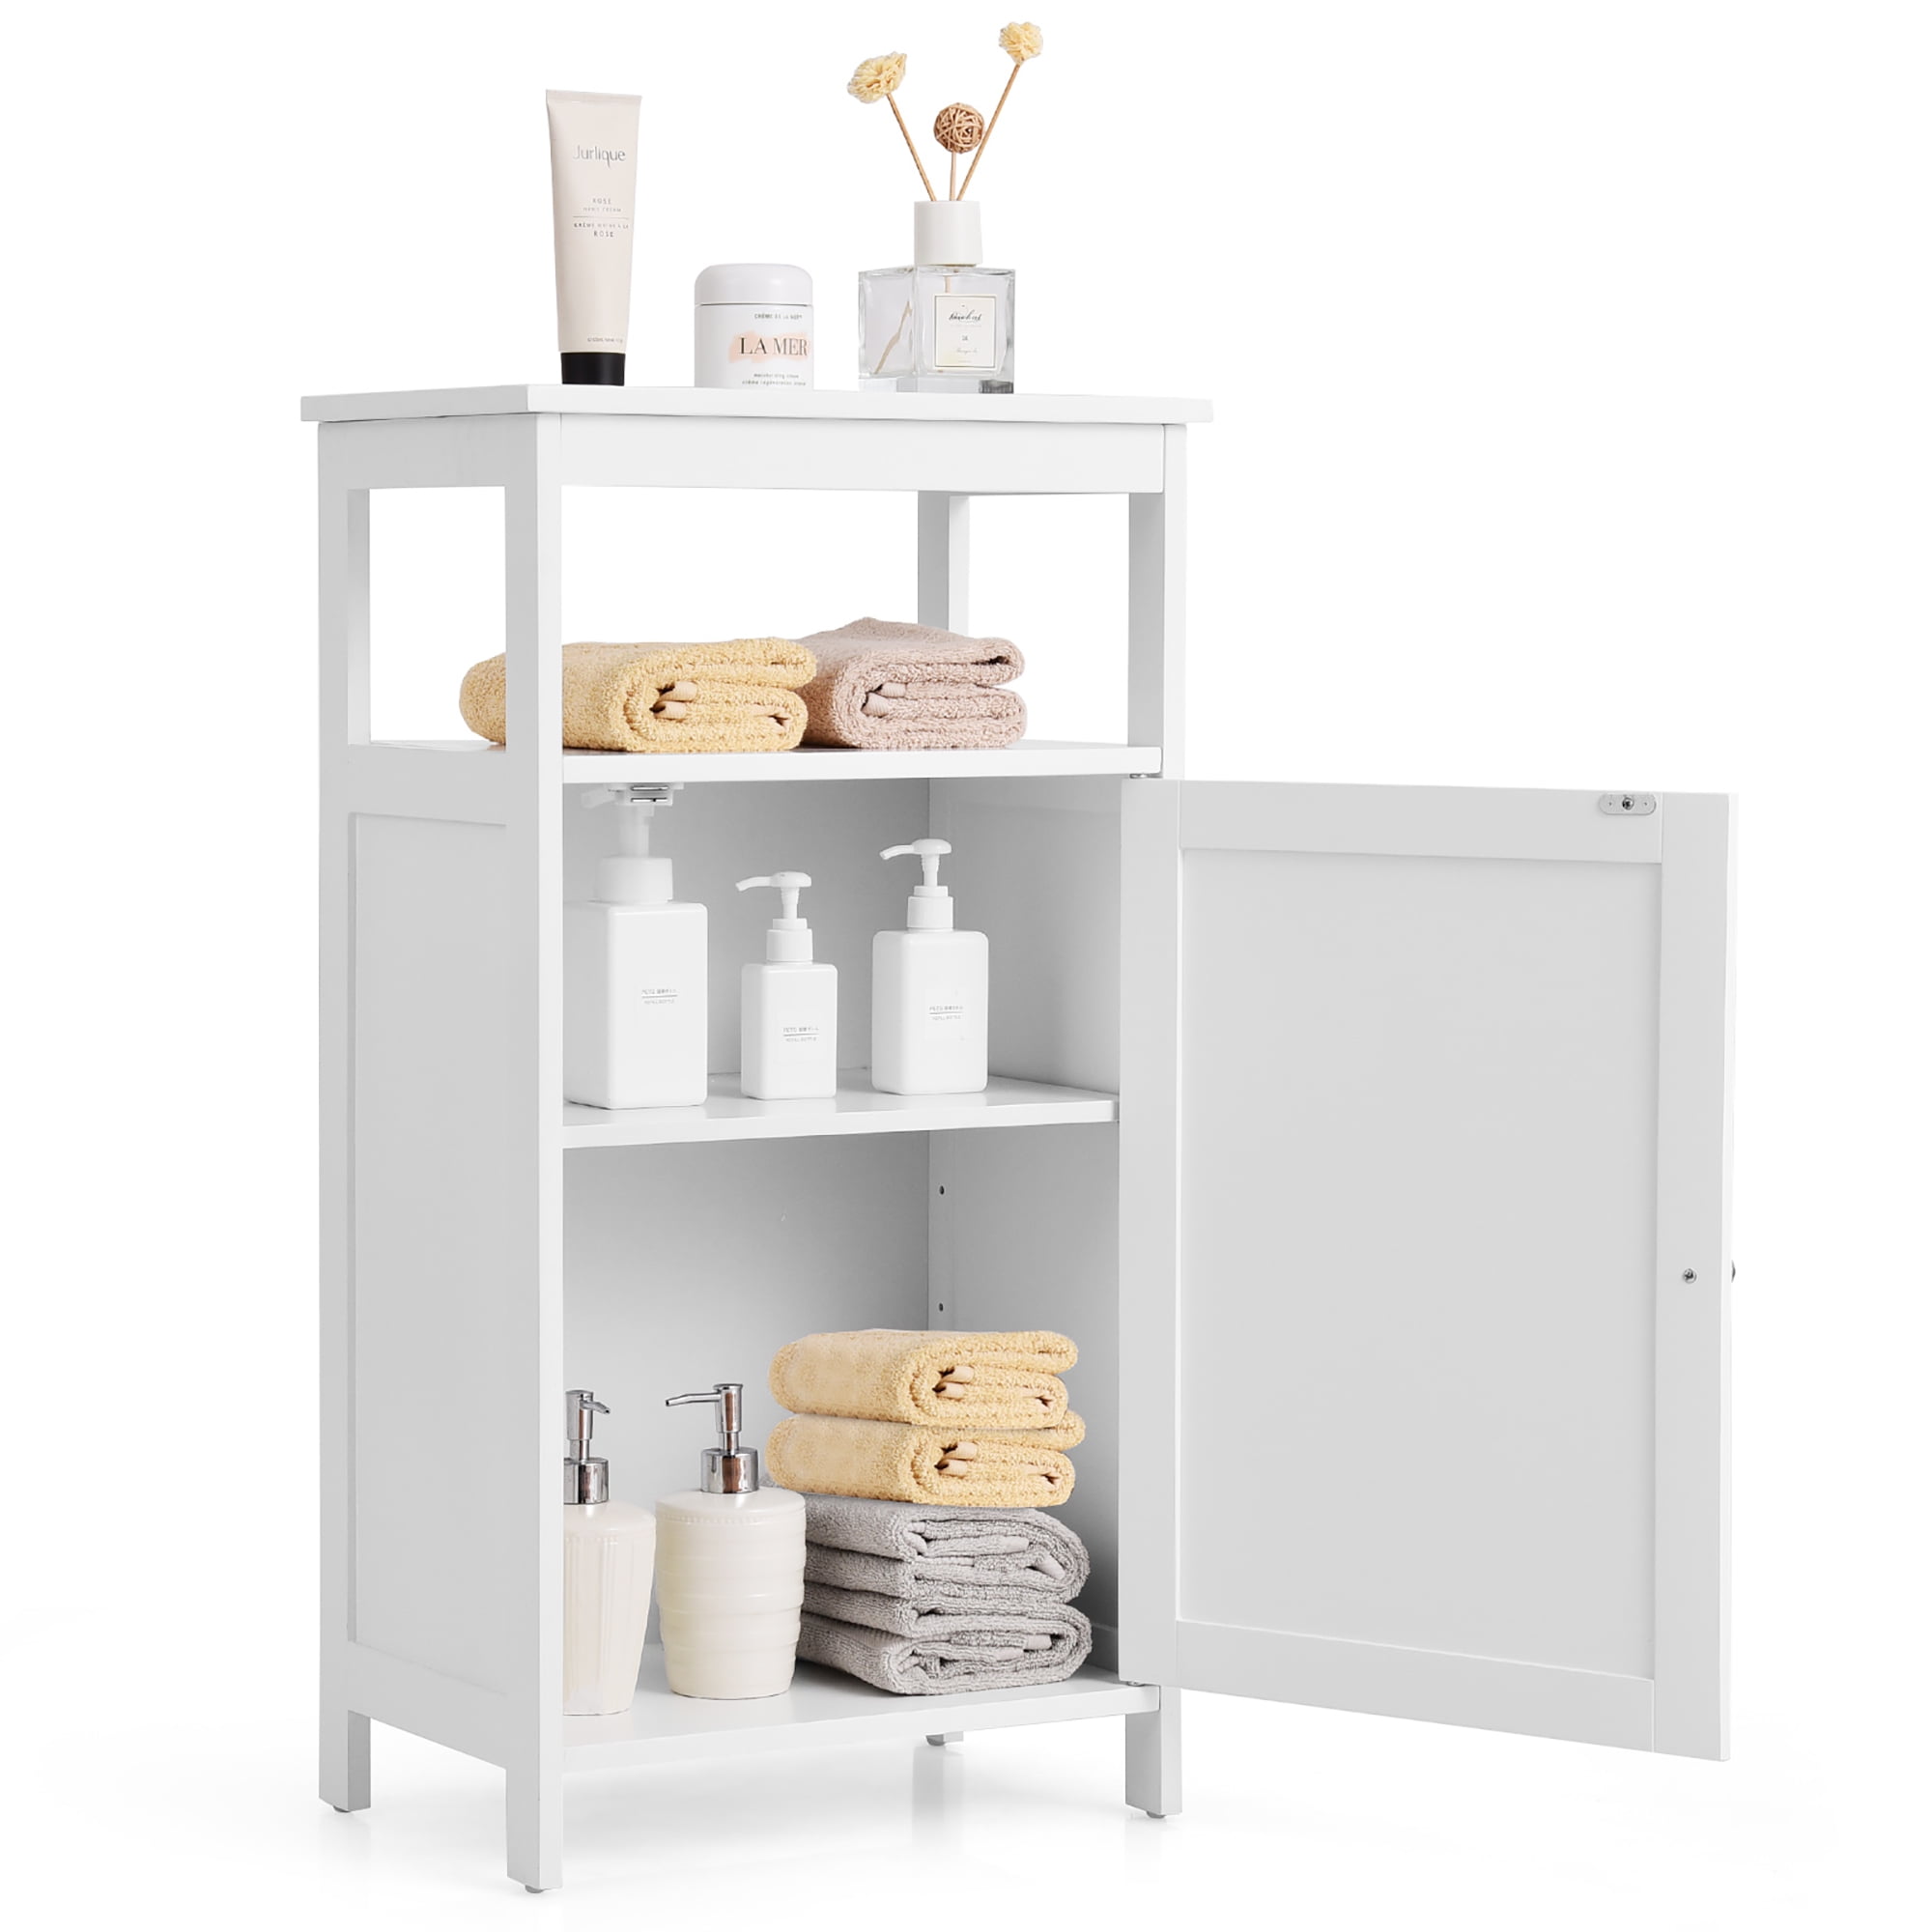 Minimalist Bathroom Storage Cabinets Walmart Canada for Simple Design